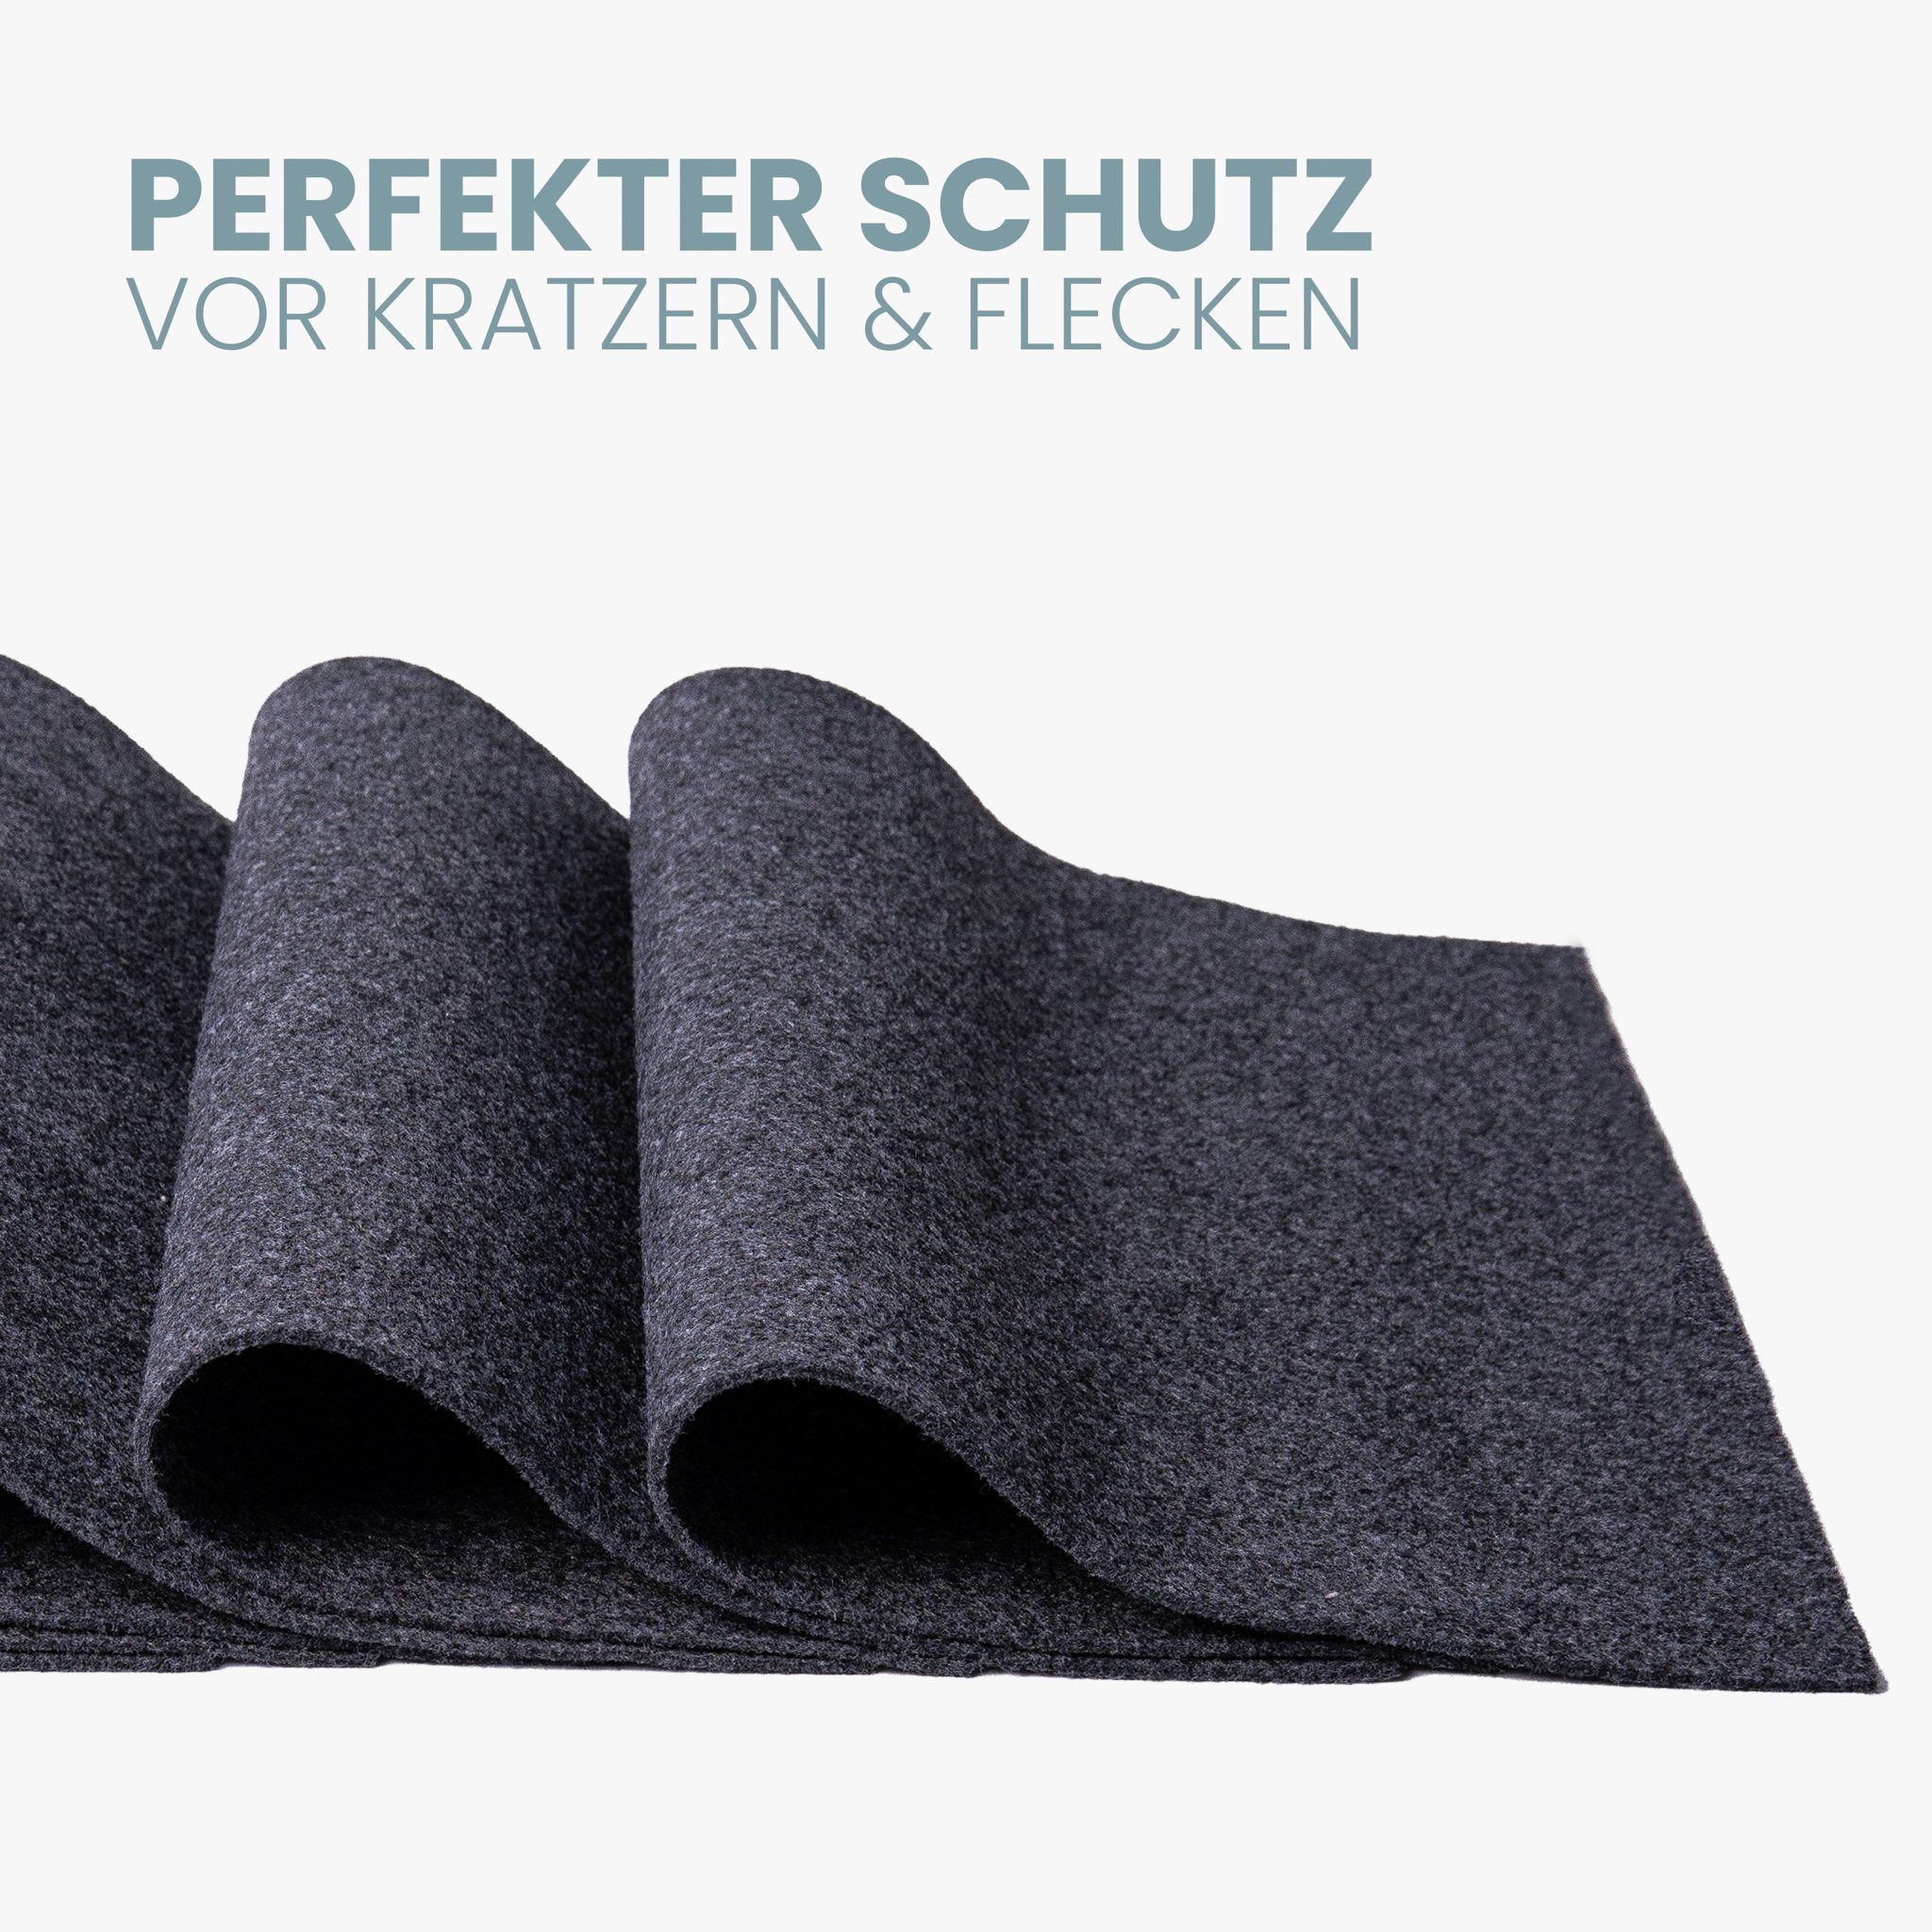 Platzset, Filz (40 x 30cm) - Easy and Platzsets, Tischset Made in Green Filz - Recycling Germany